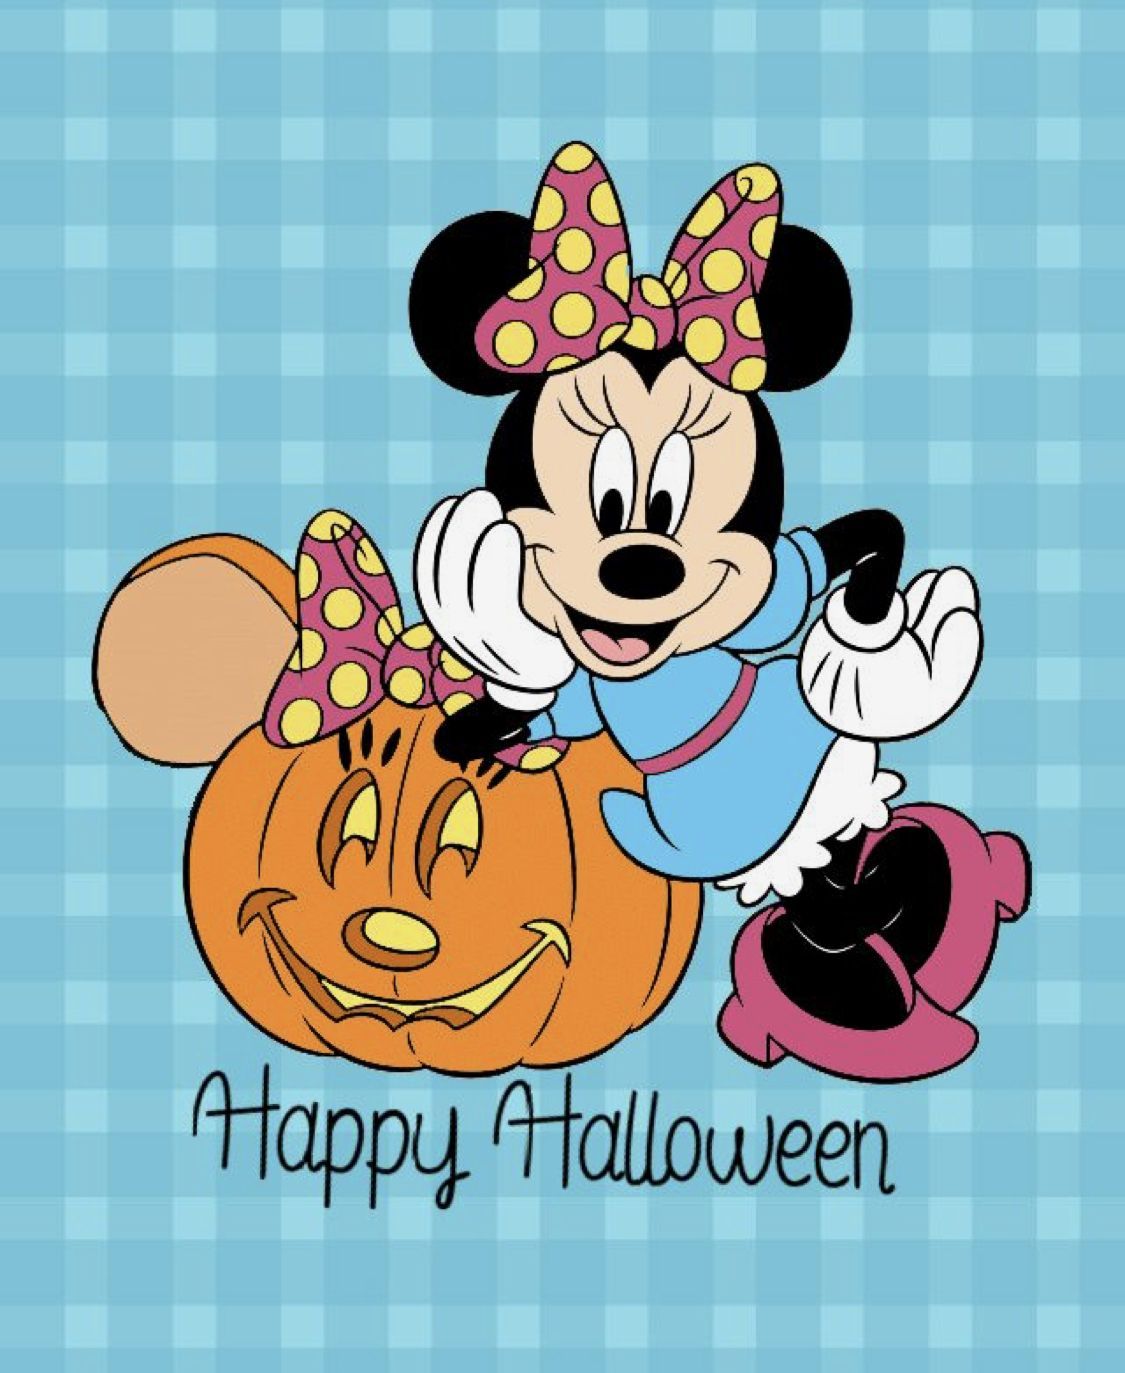 Disney Halloween. Mickey mouse halloween, Minnie mouse halloween, Disney holiday